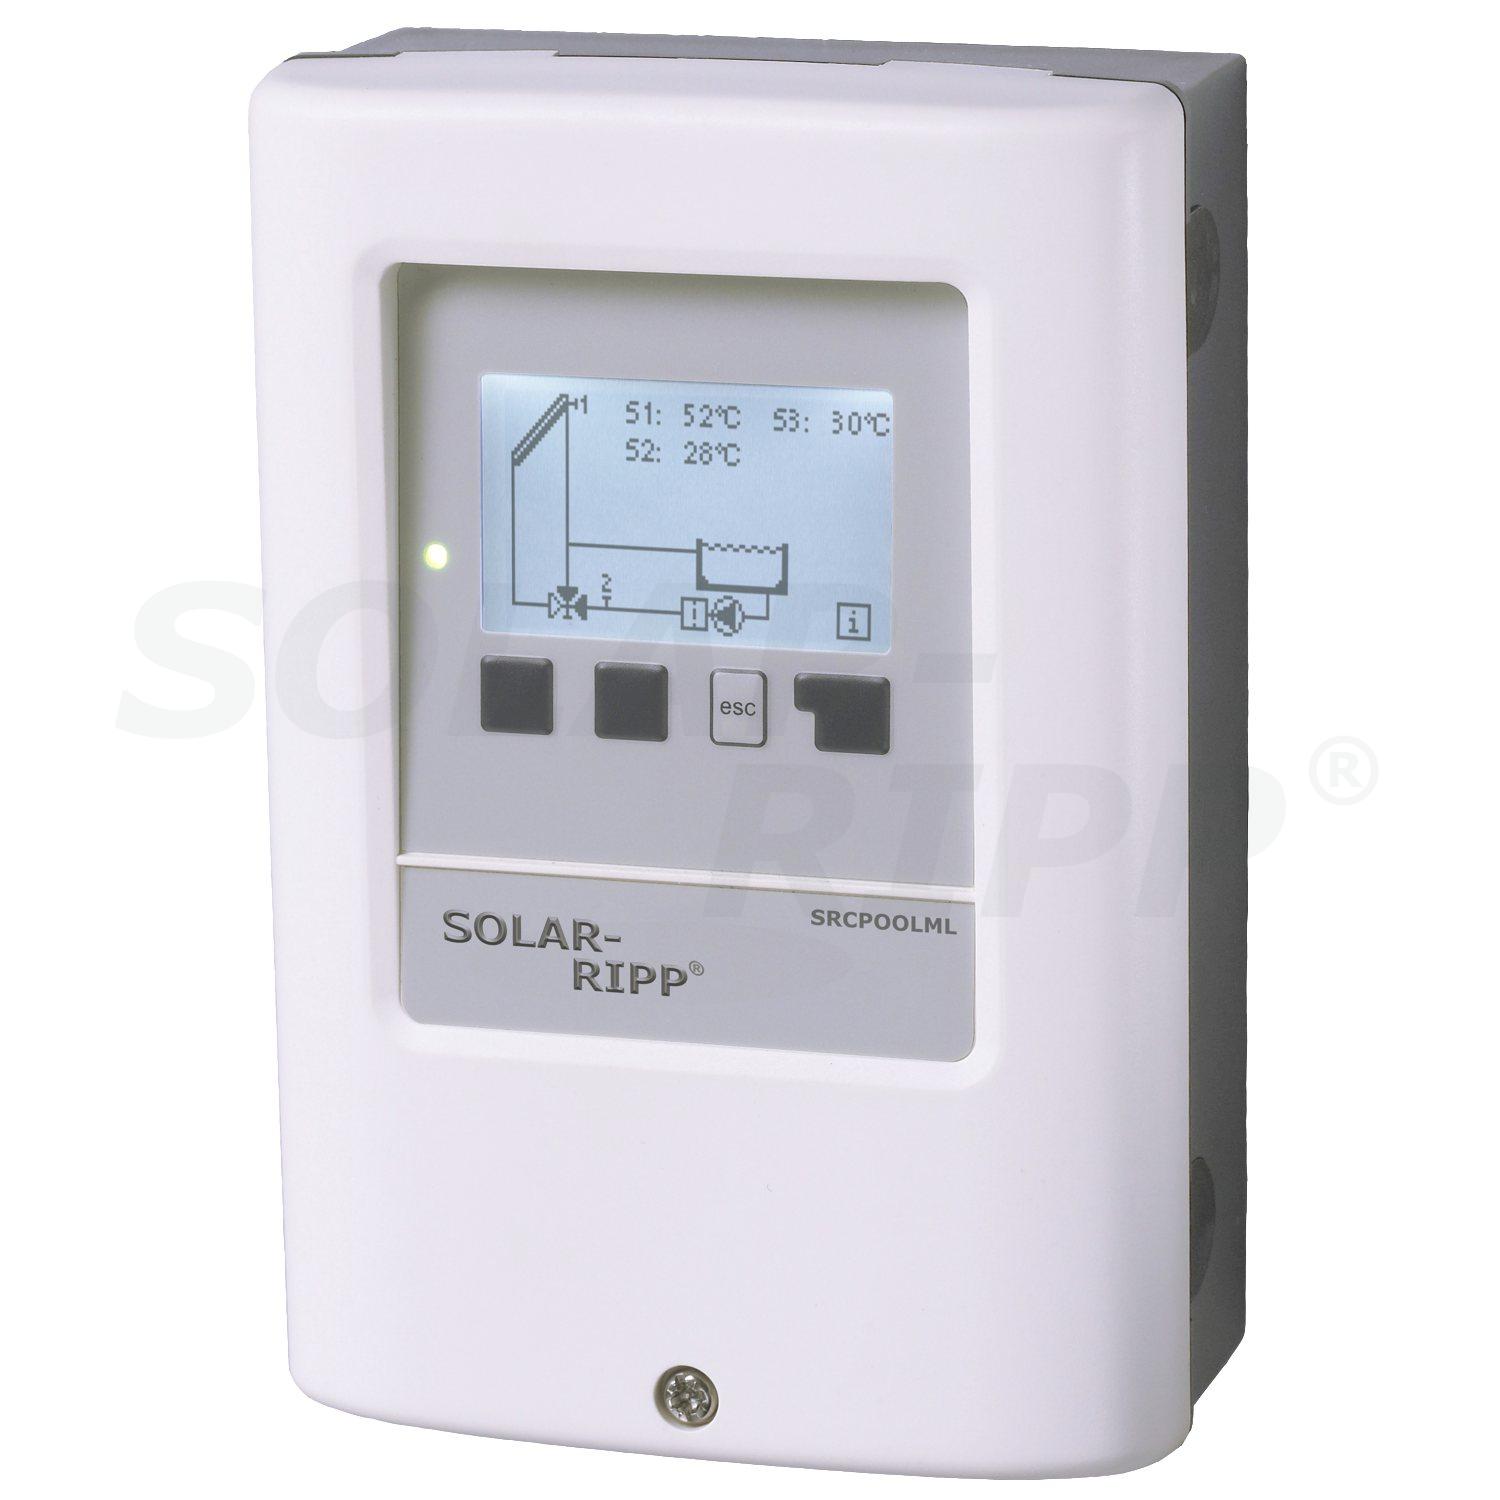 SOLAR-RIPP ® Solarcontroller SRCPOOLML...